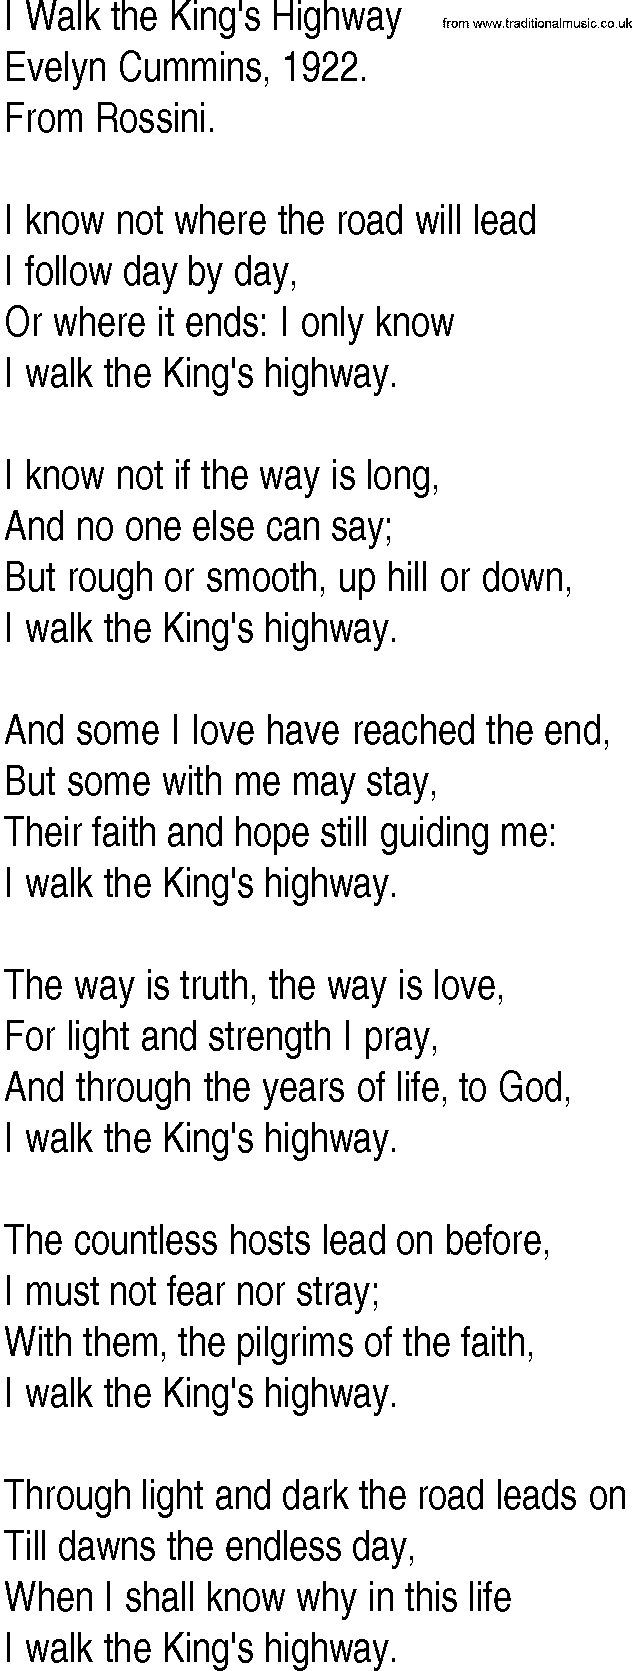 Hymn and Gospel Song: I Walk the King's Highway by Evelyn Cummins lyrics